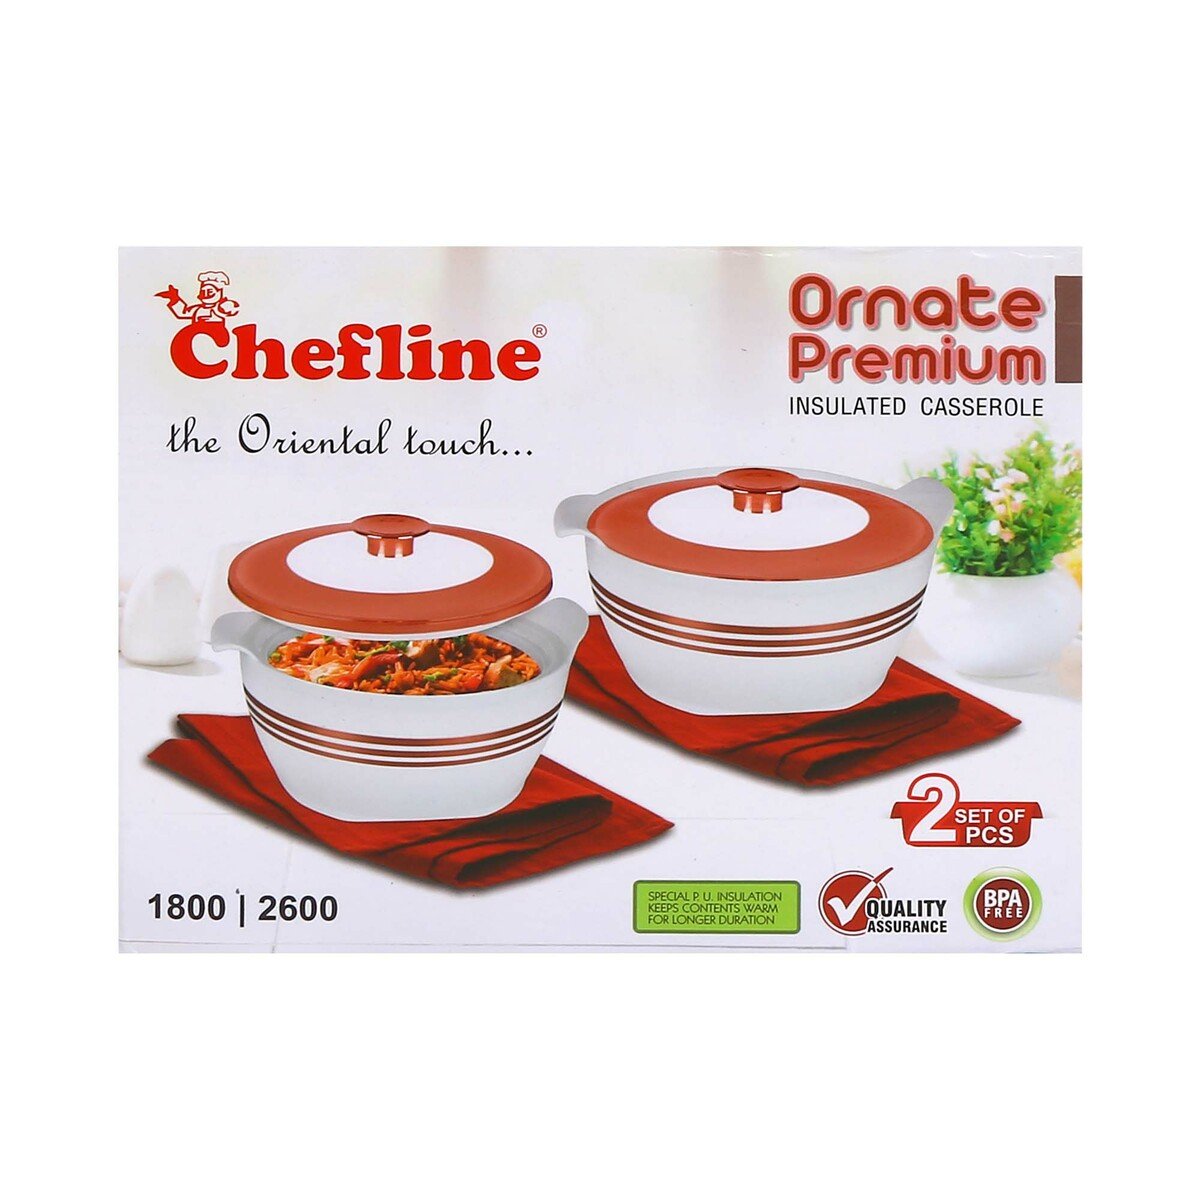 Chefline Hot Pot Plastic ORNATE 182600 2pcs Assorted Colors